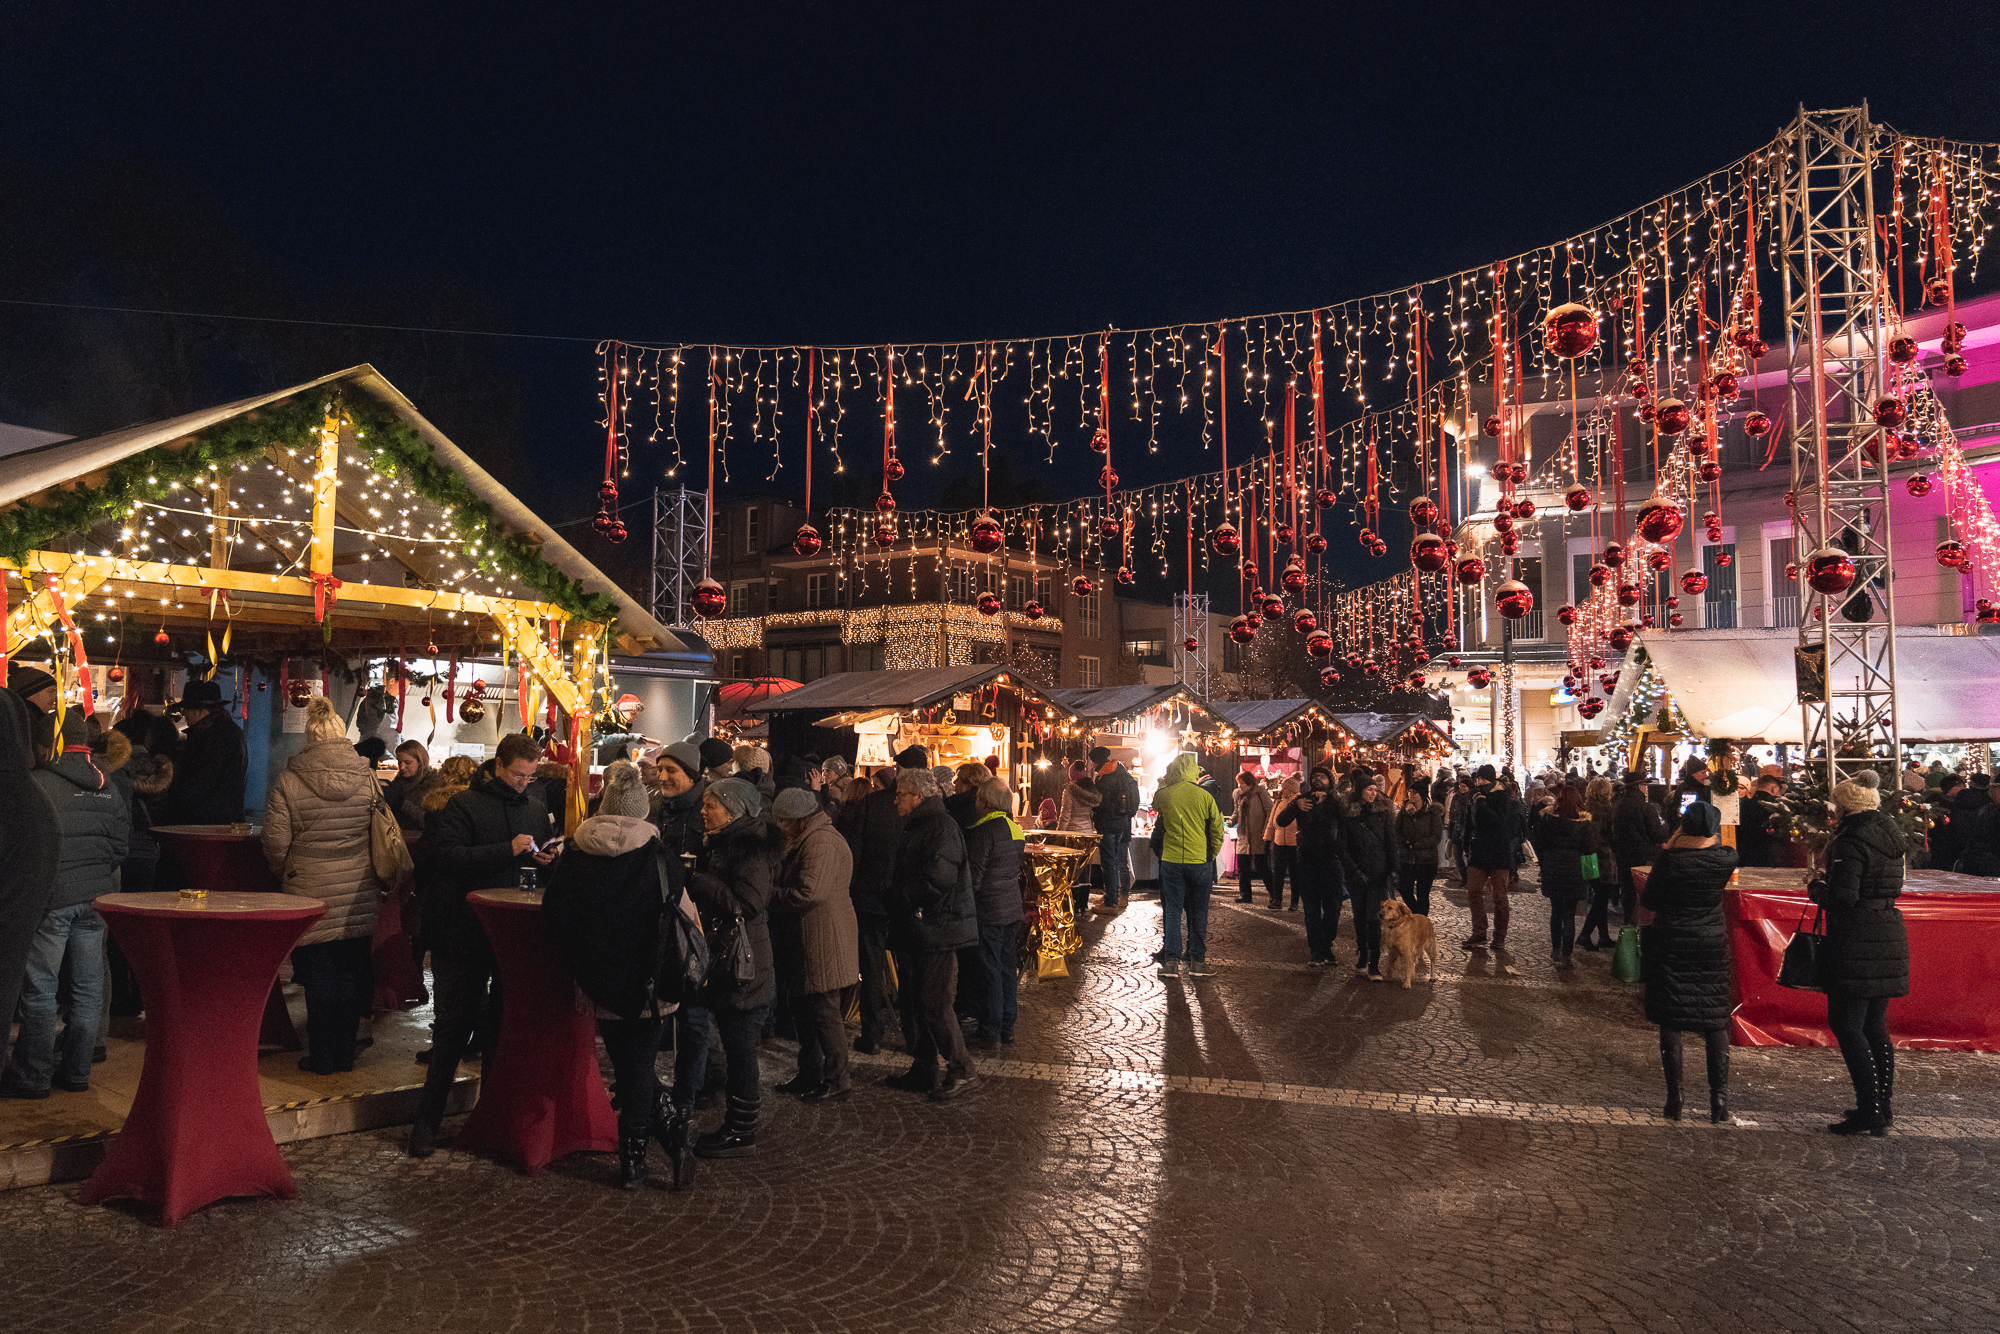 Christmas market at Velden am Wörther See, Austria